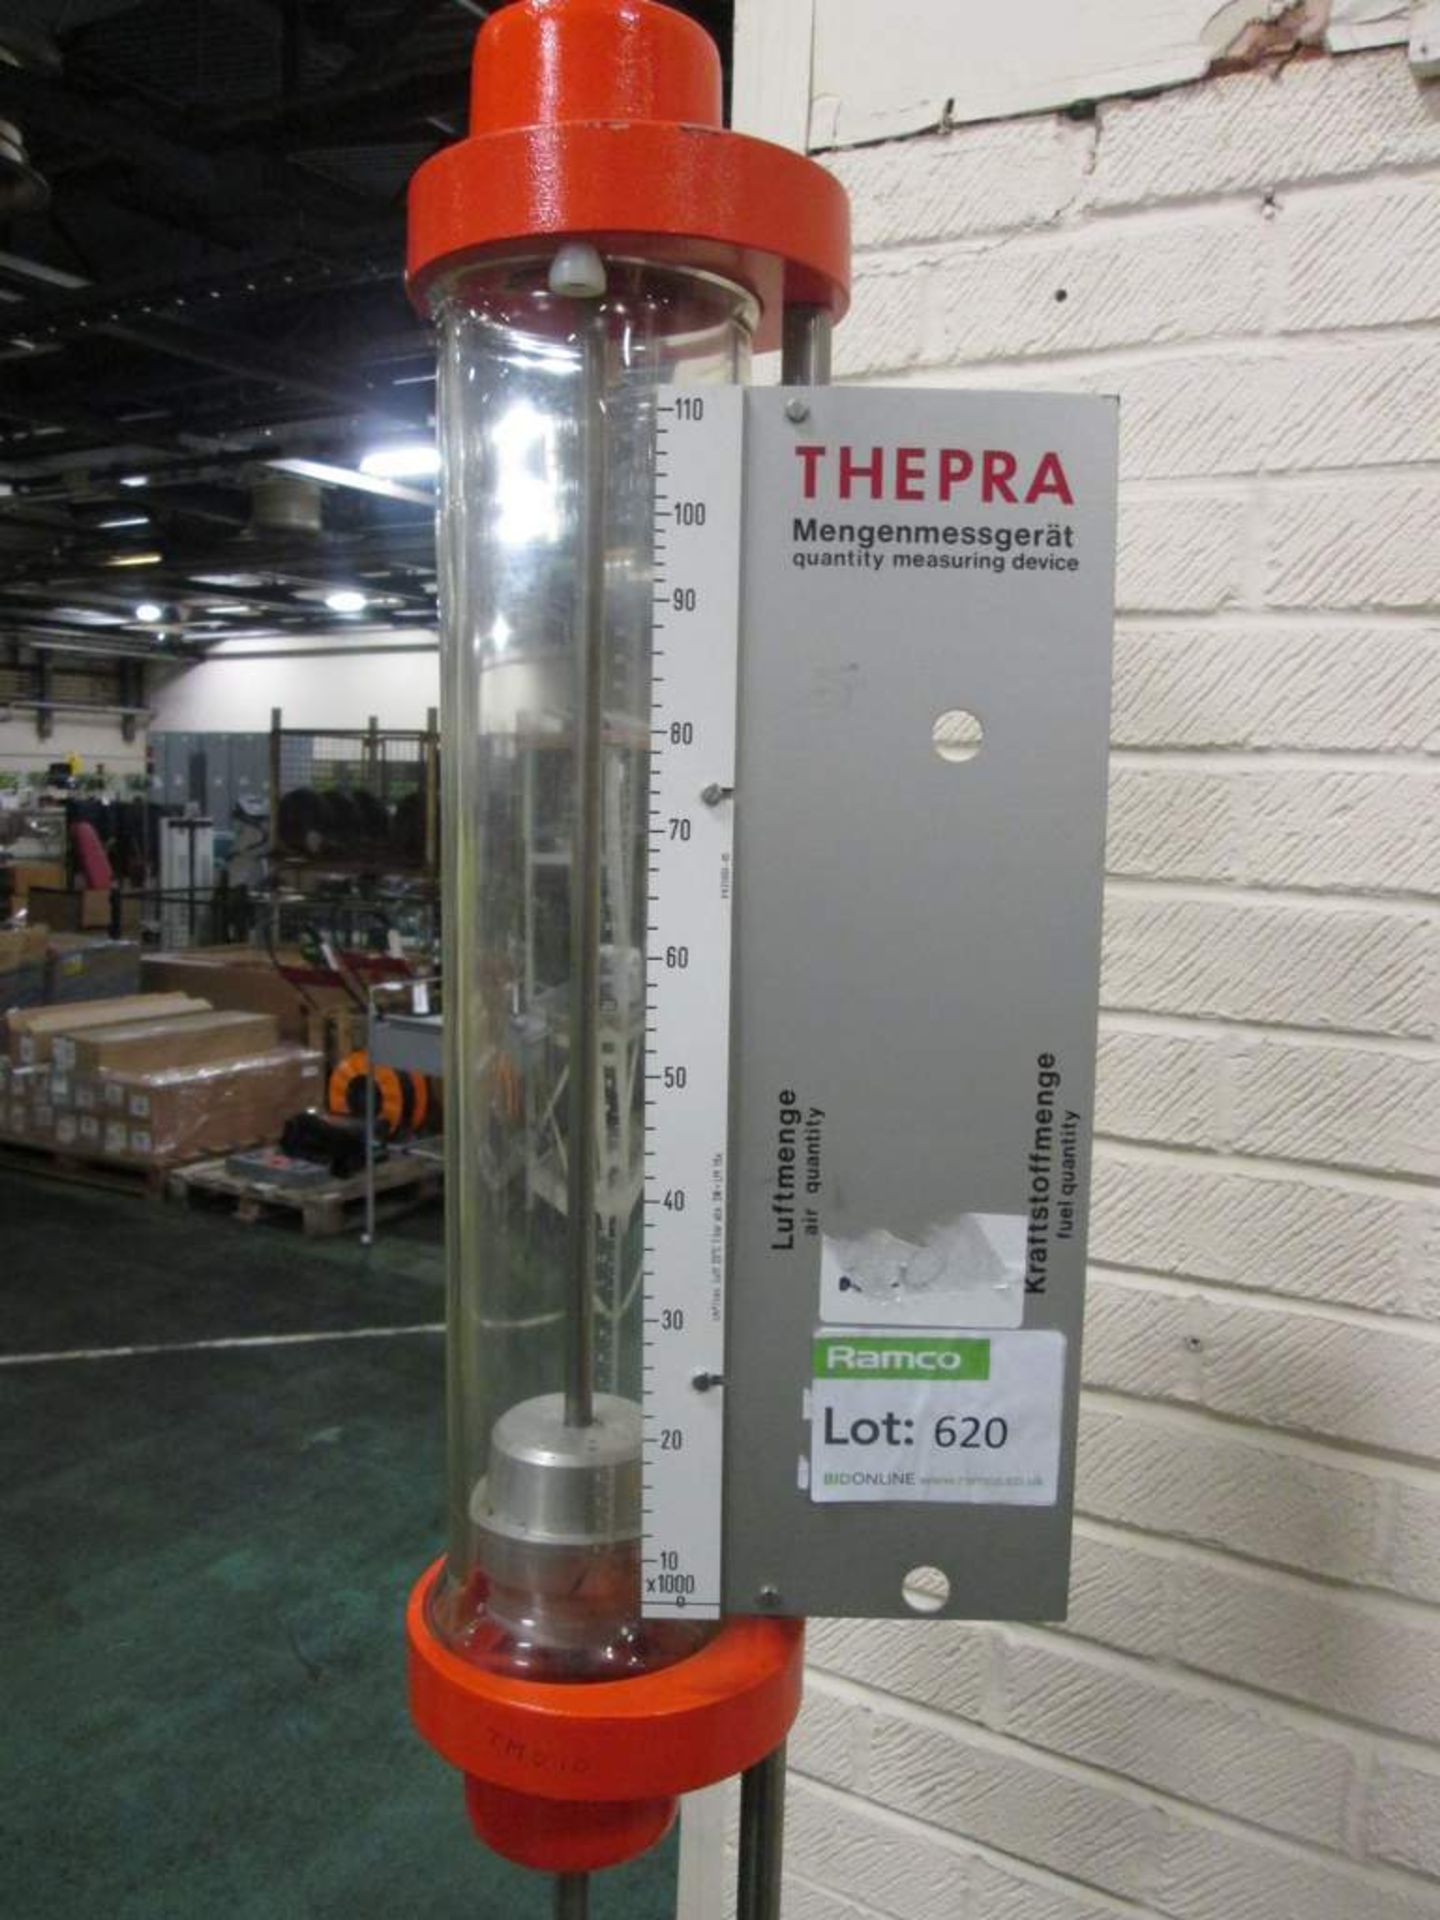 Thepra Quantity Measuring Device - Image 2 of 2